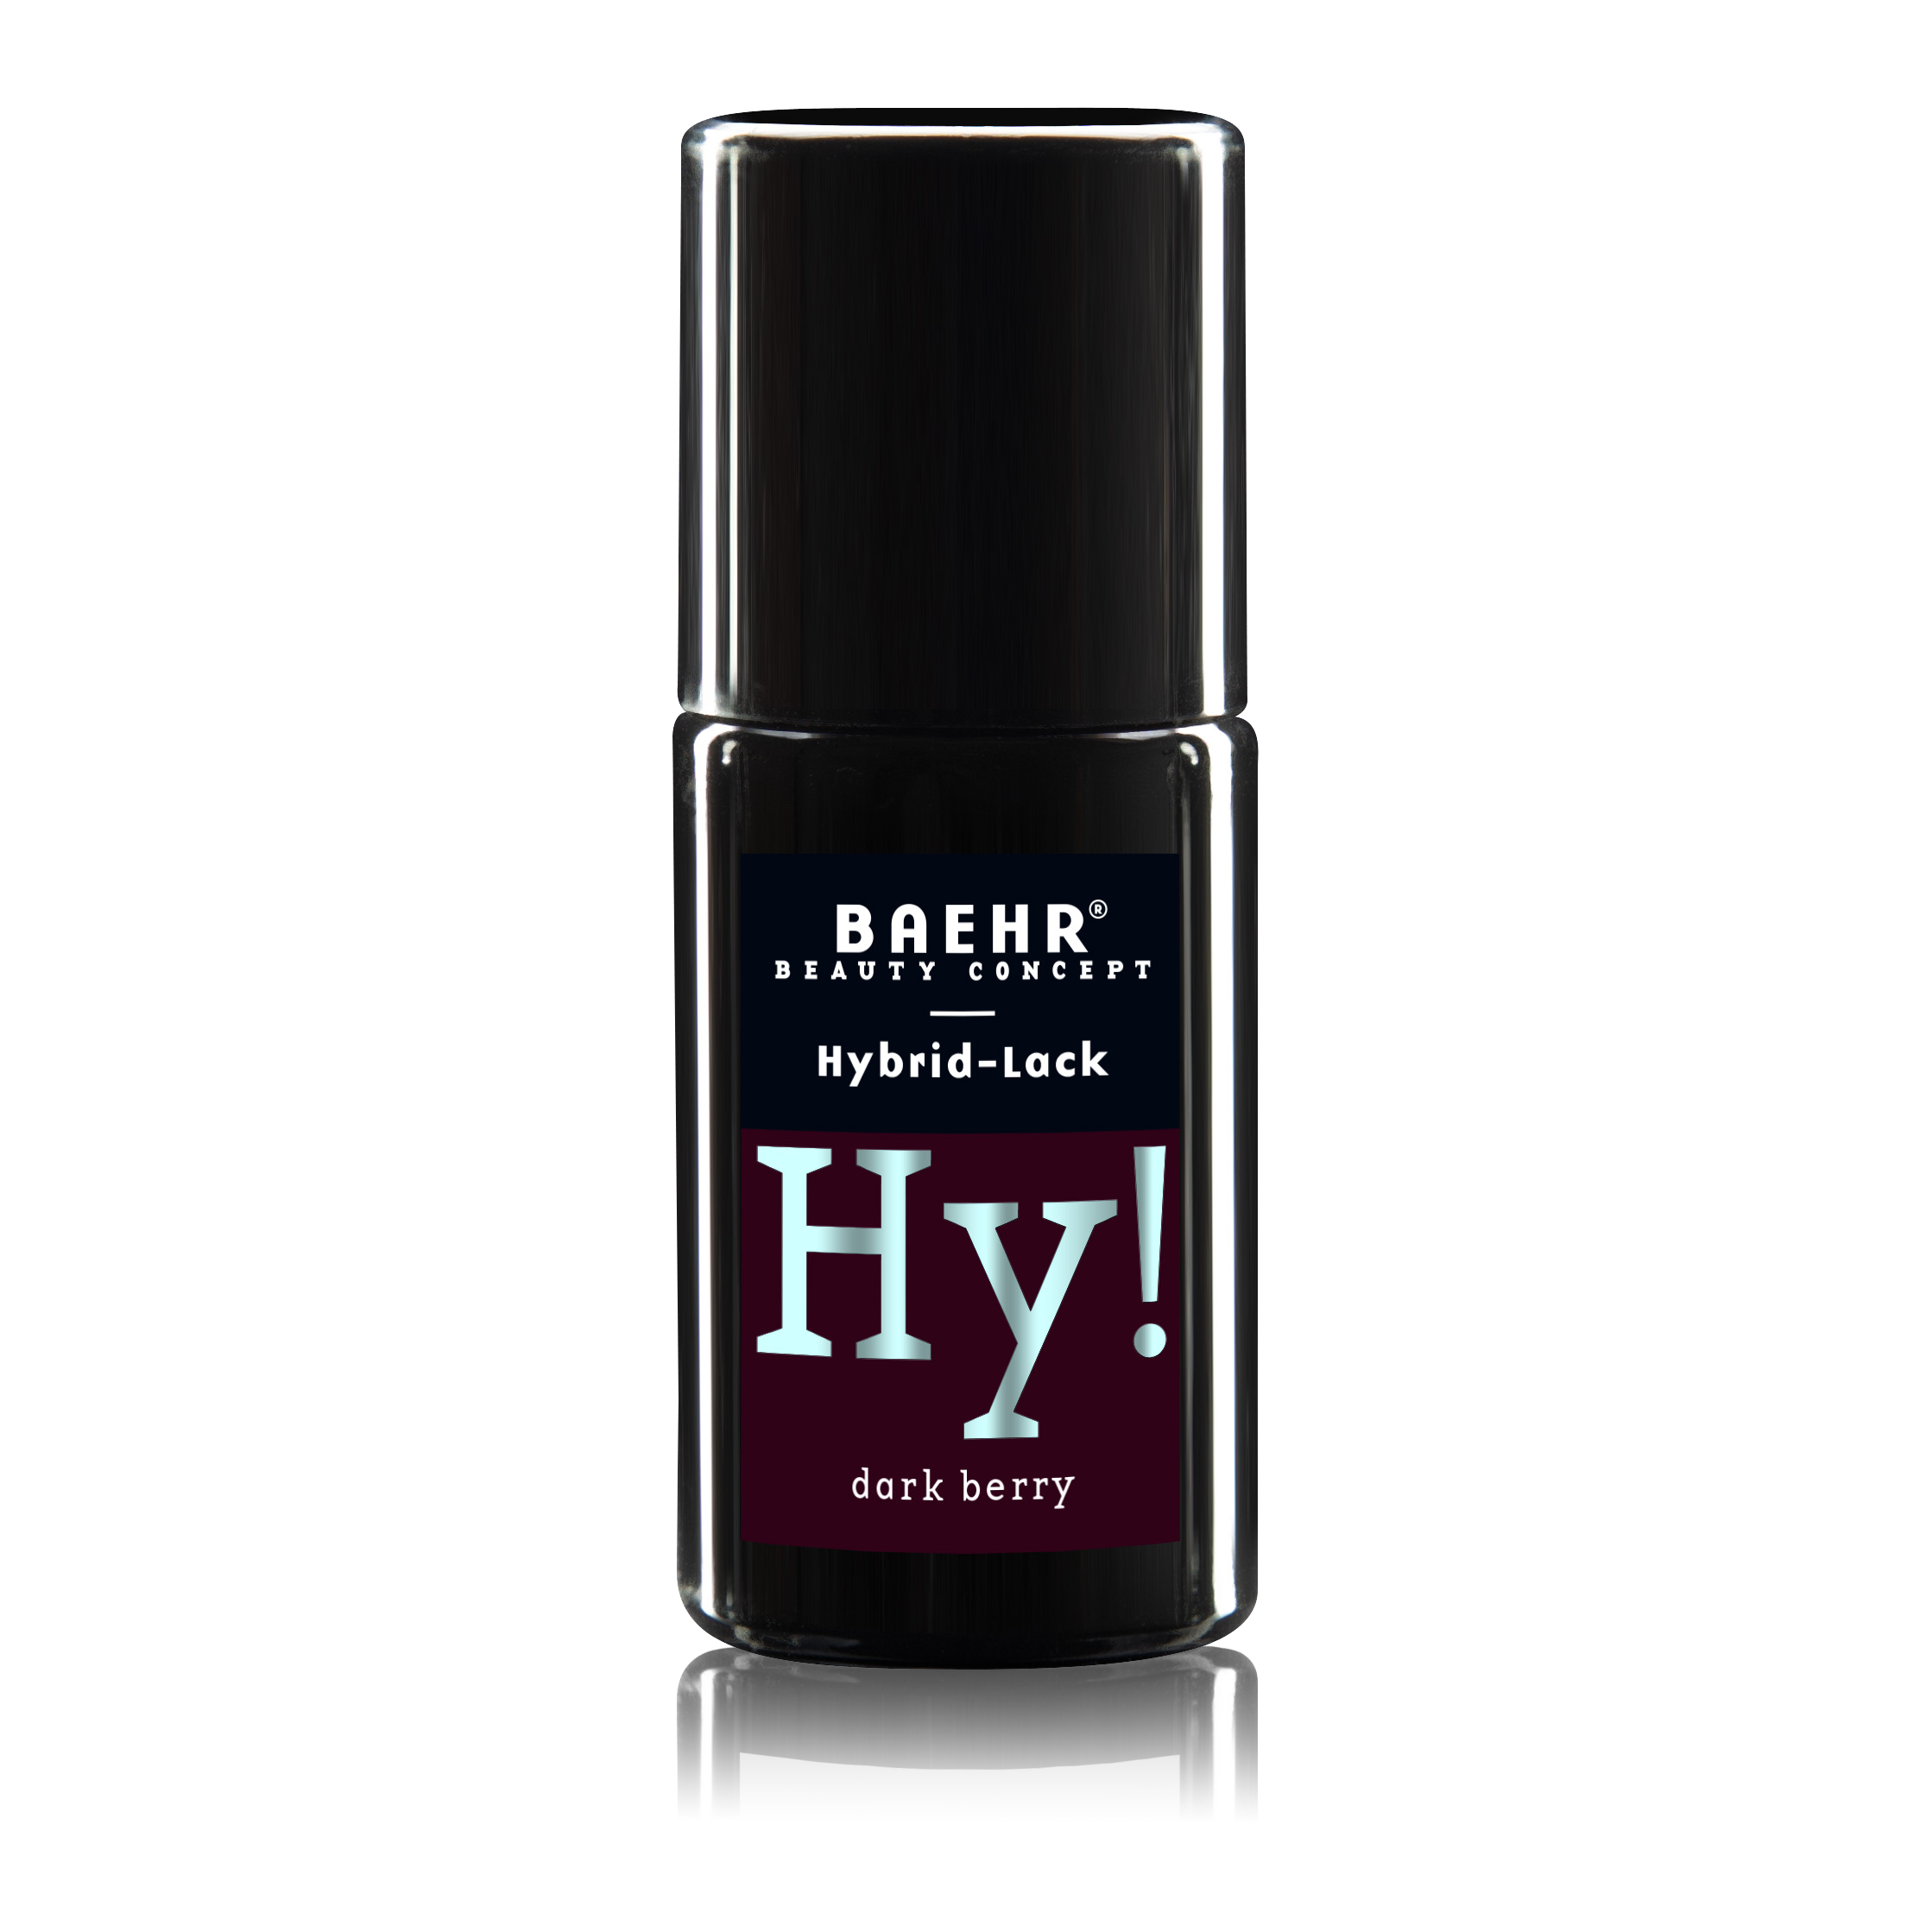 hy-hybrid-lack--dark-berry_27314